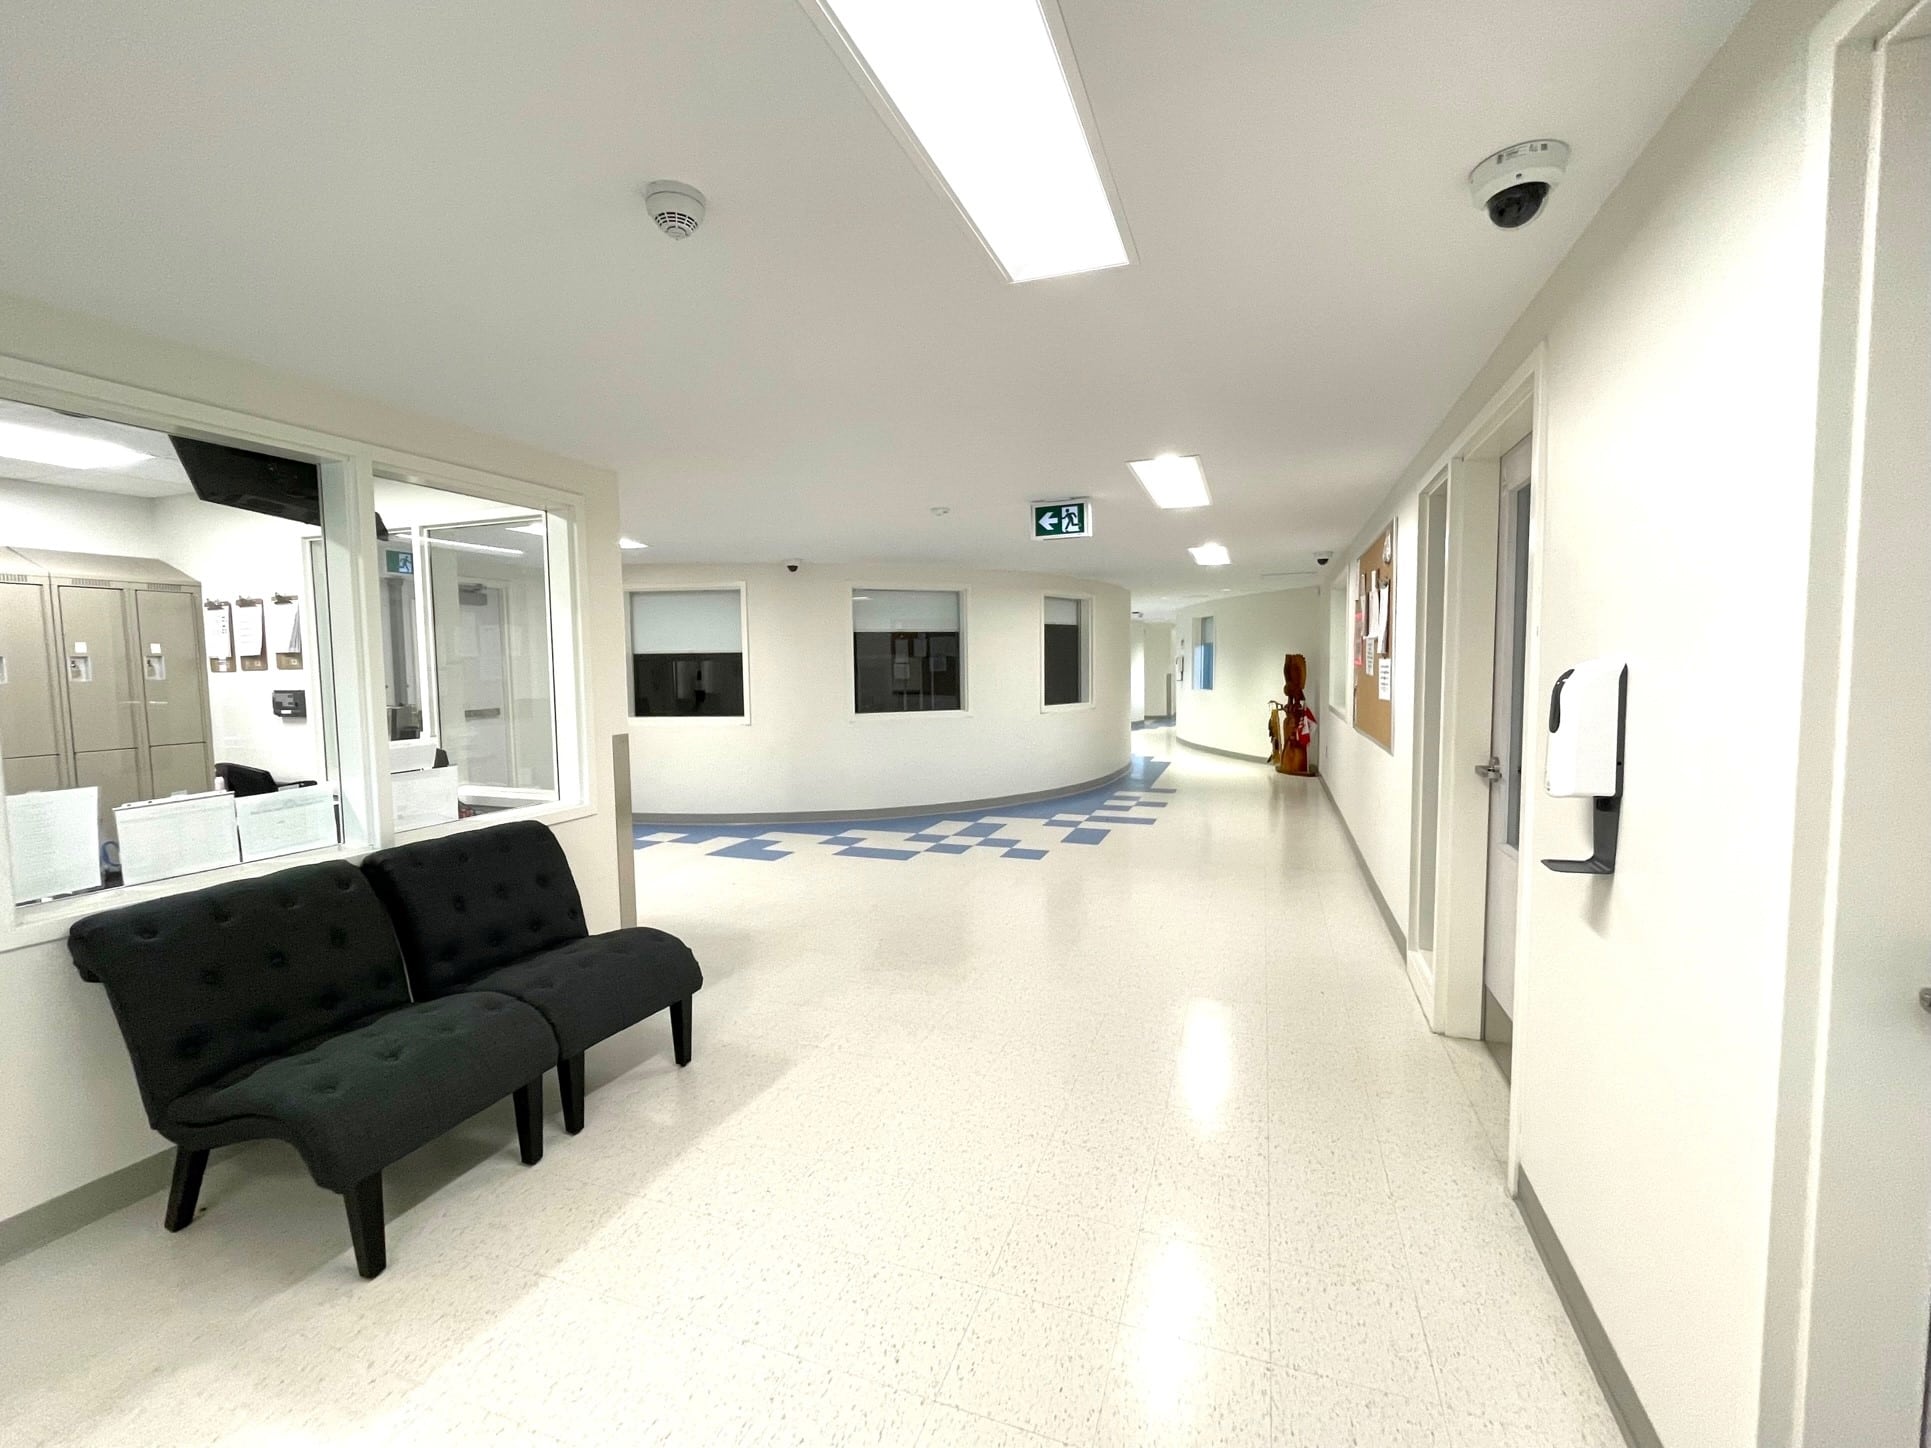 the hallway of a facility